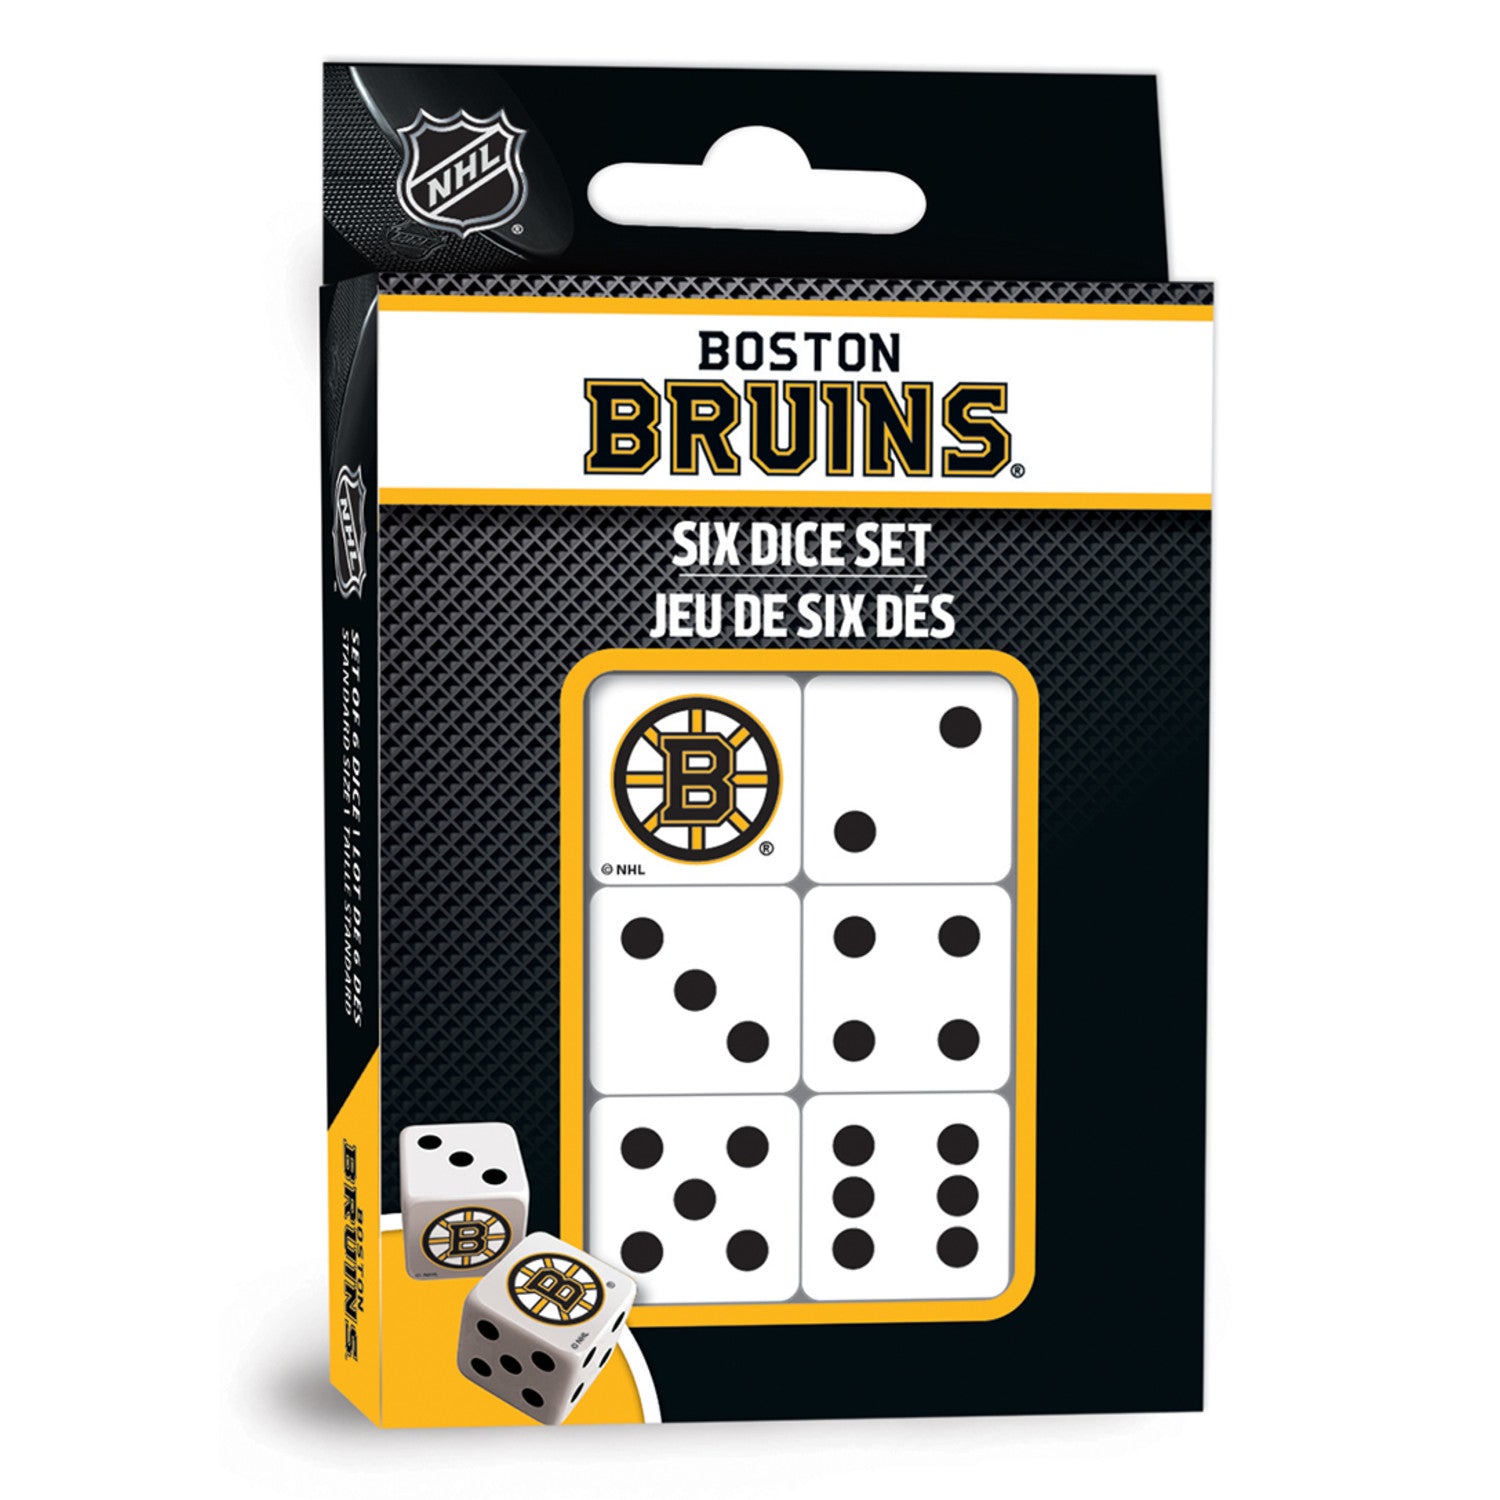 Boston Bruins Dice Set